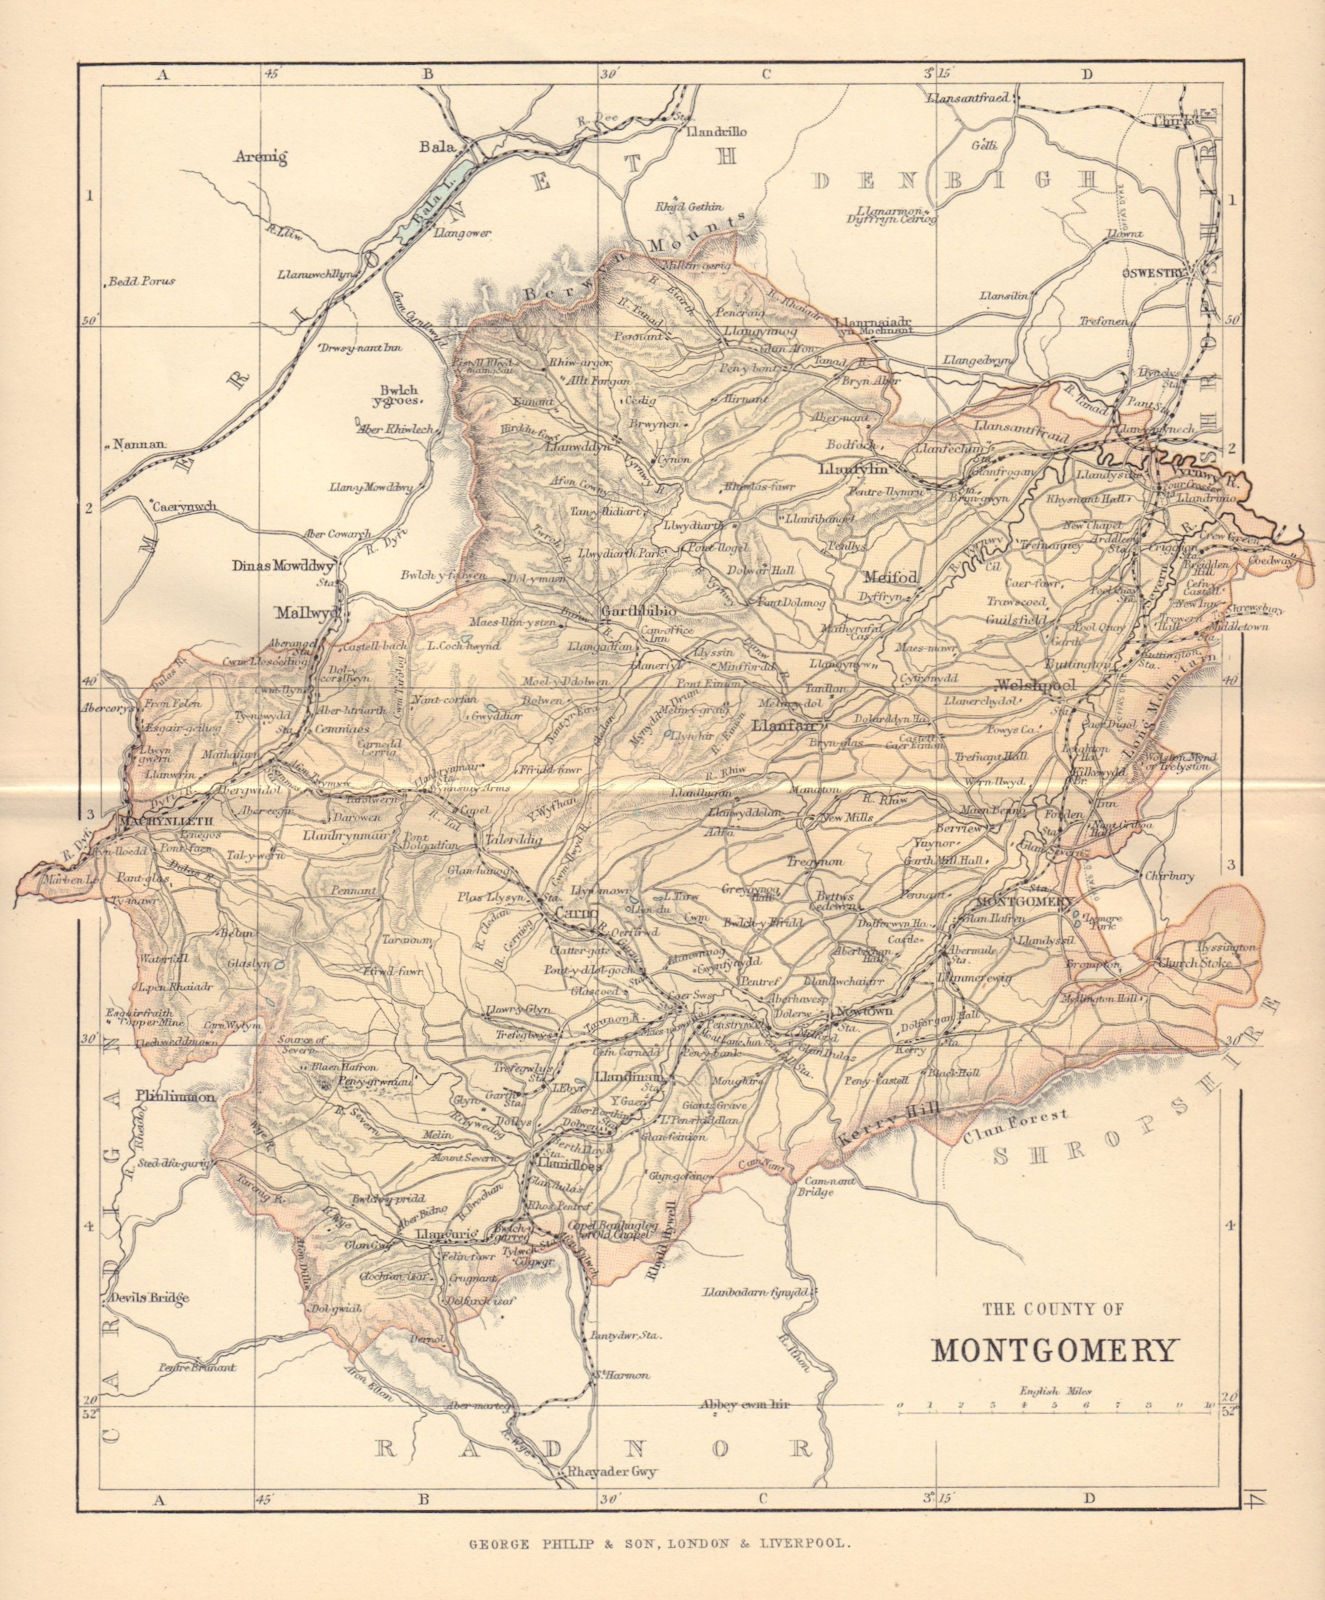 Associate Product MONTGOMERYSHIRE "County of Montgomery" Welshpool Wales BARTHOLOMEW 1885 map